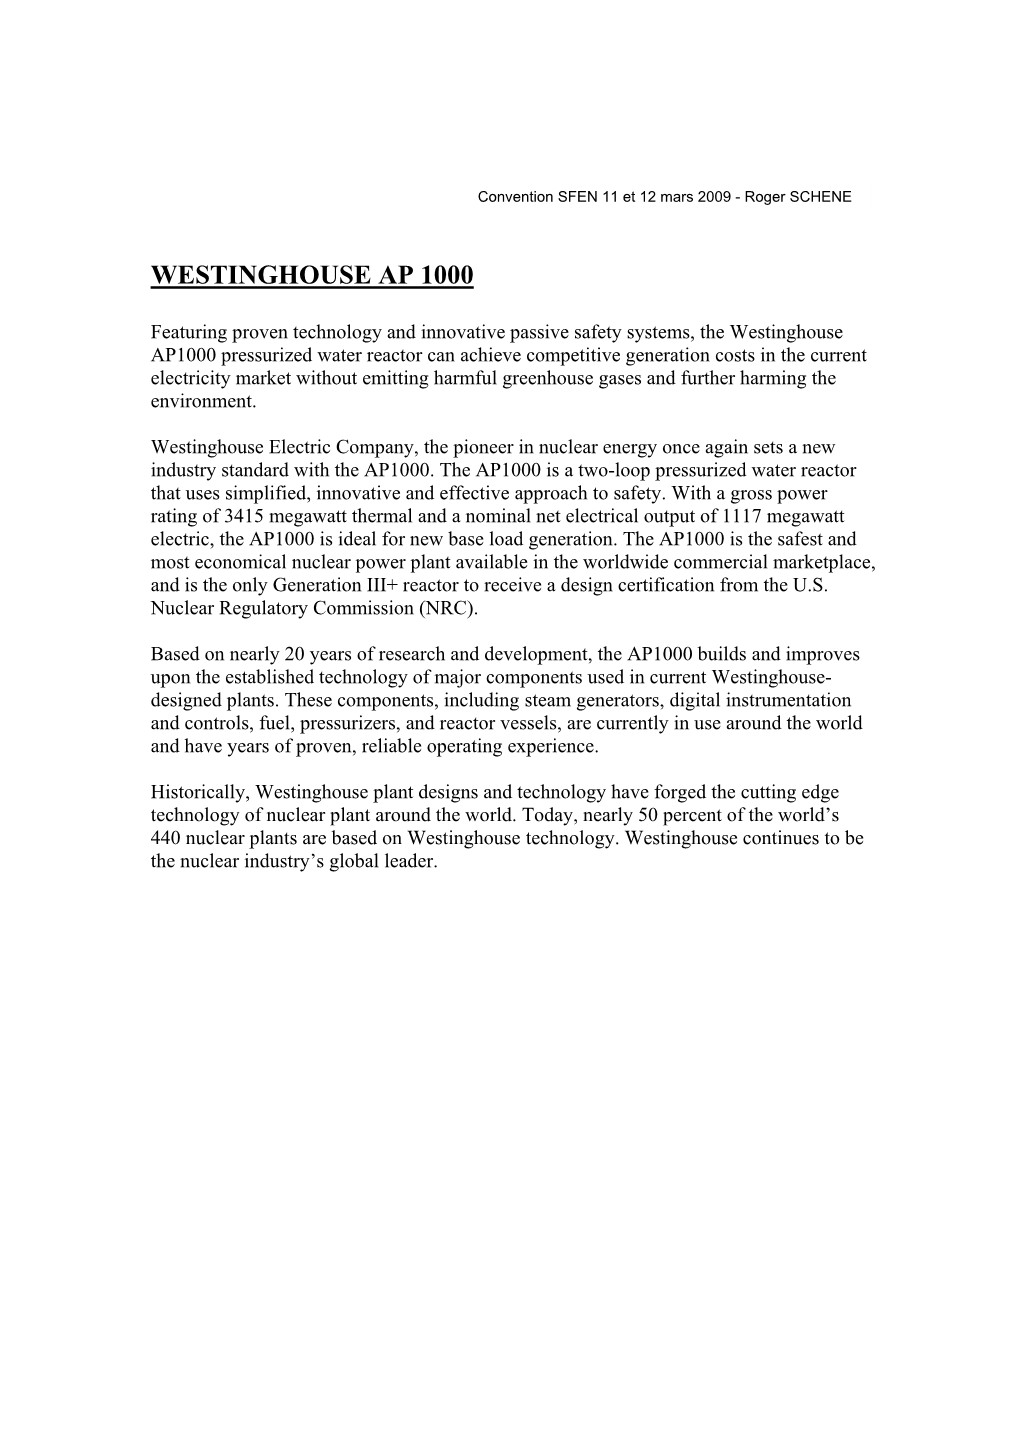 Westinghouse Ap 1000